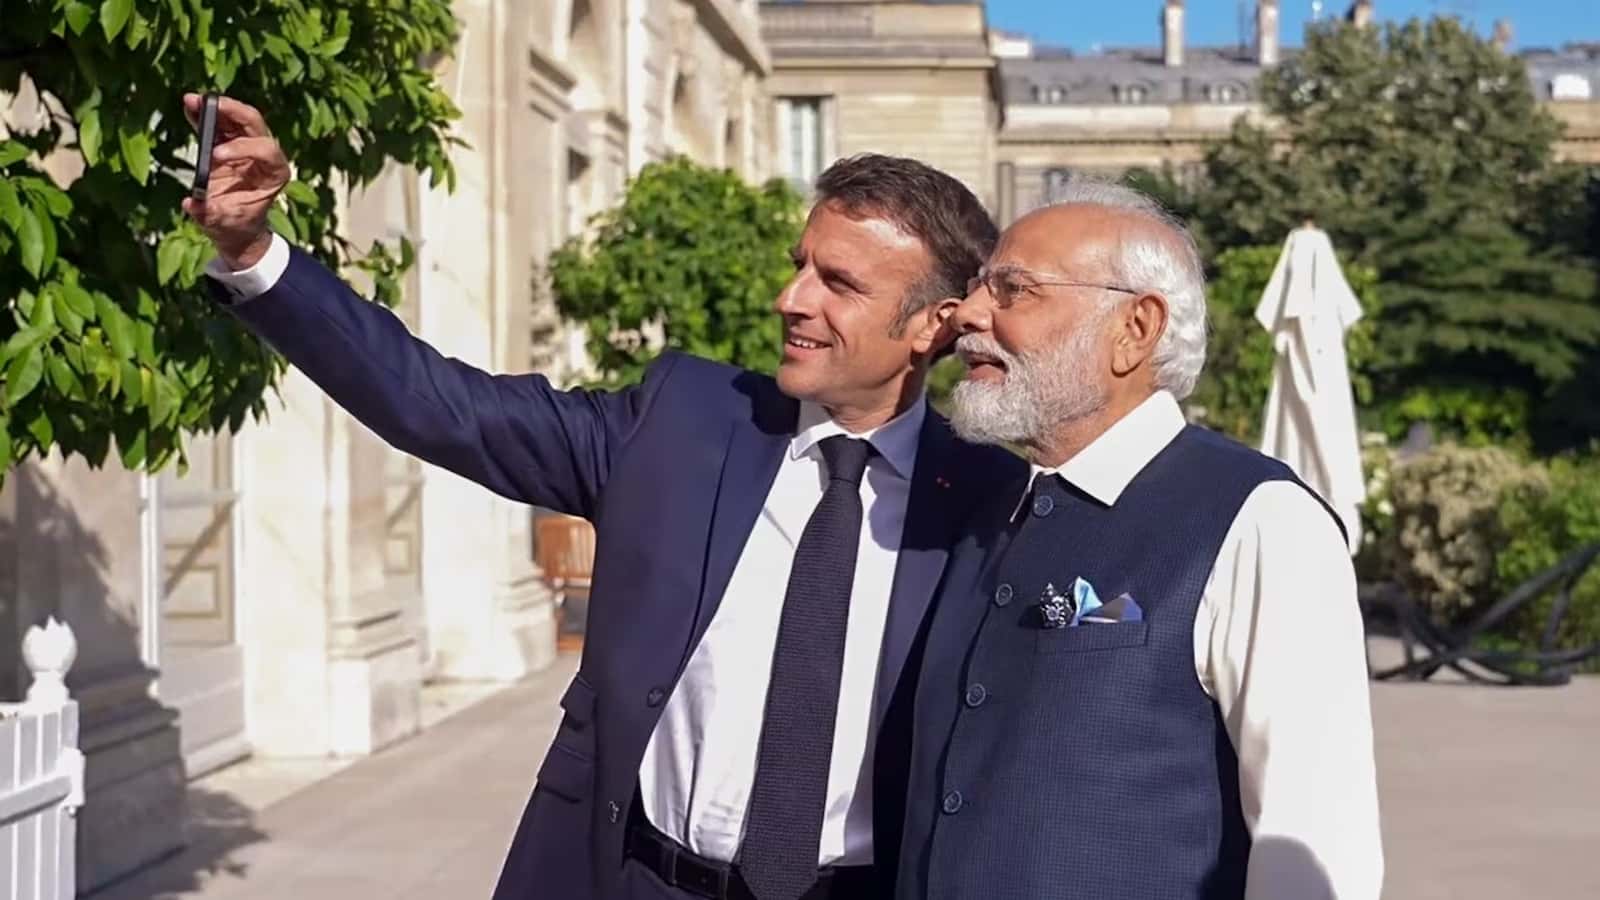 Modi and Macron defense ties, France and India defence ties